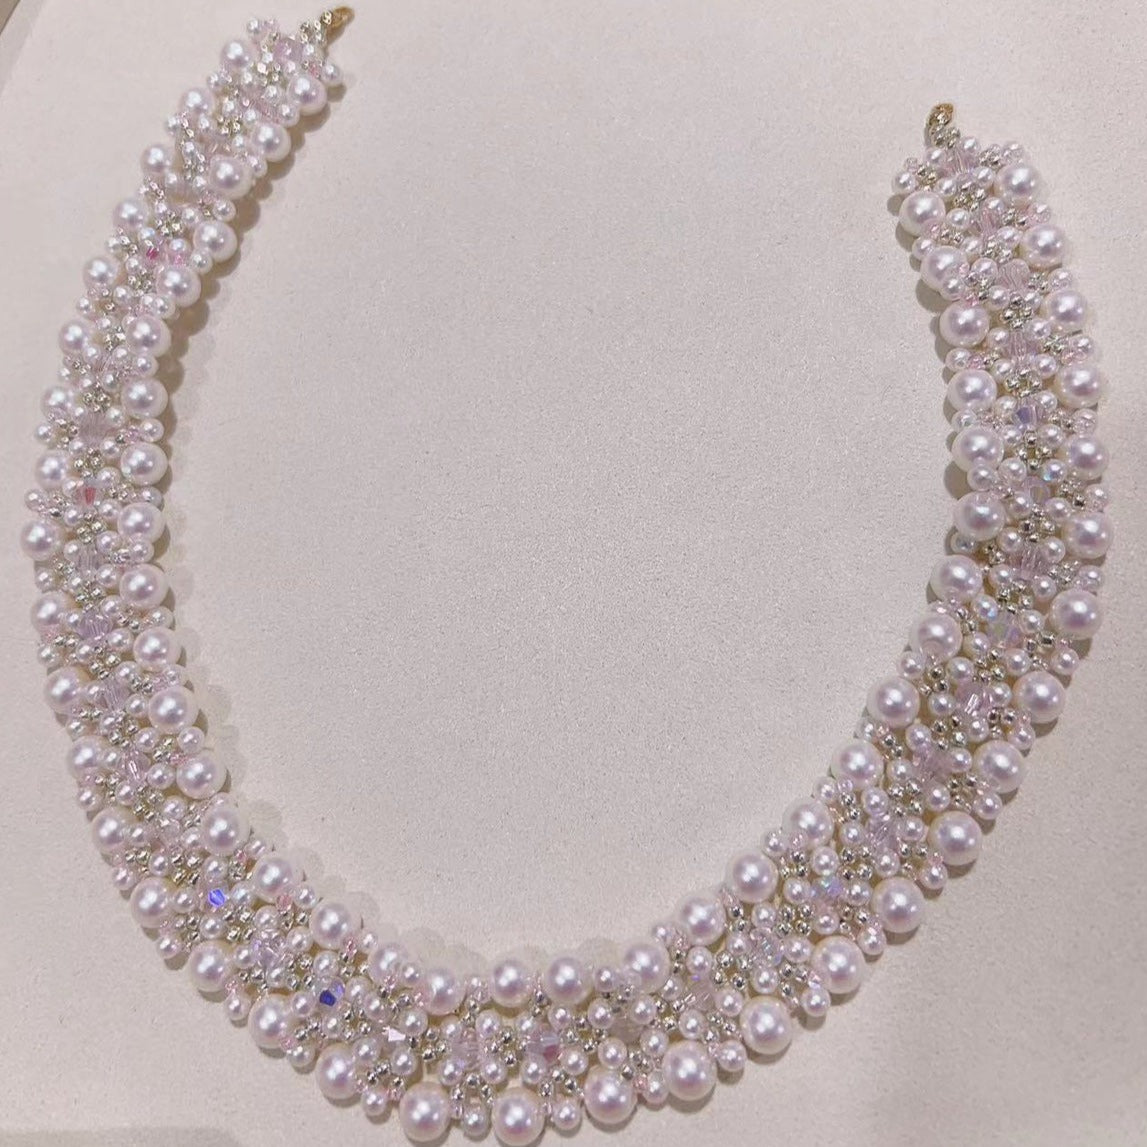 Andromeda's blingbling beaded necklace handmade jewelry choker fashion item